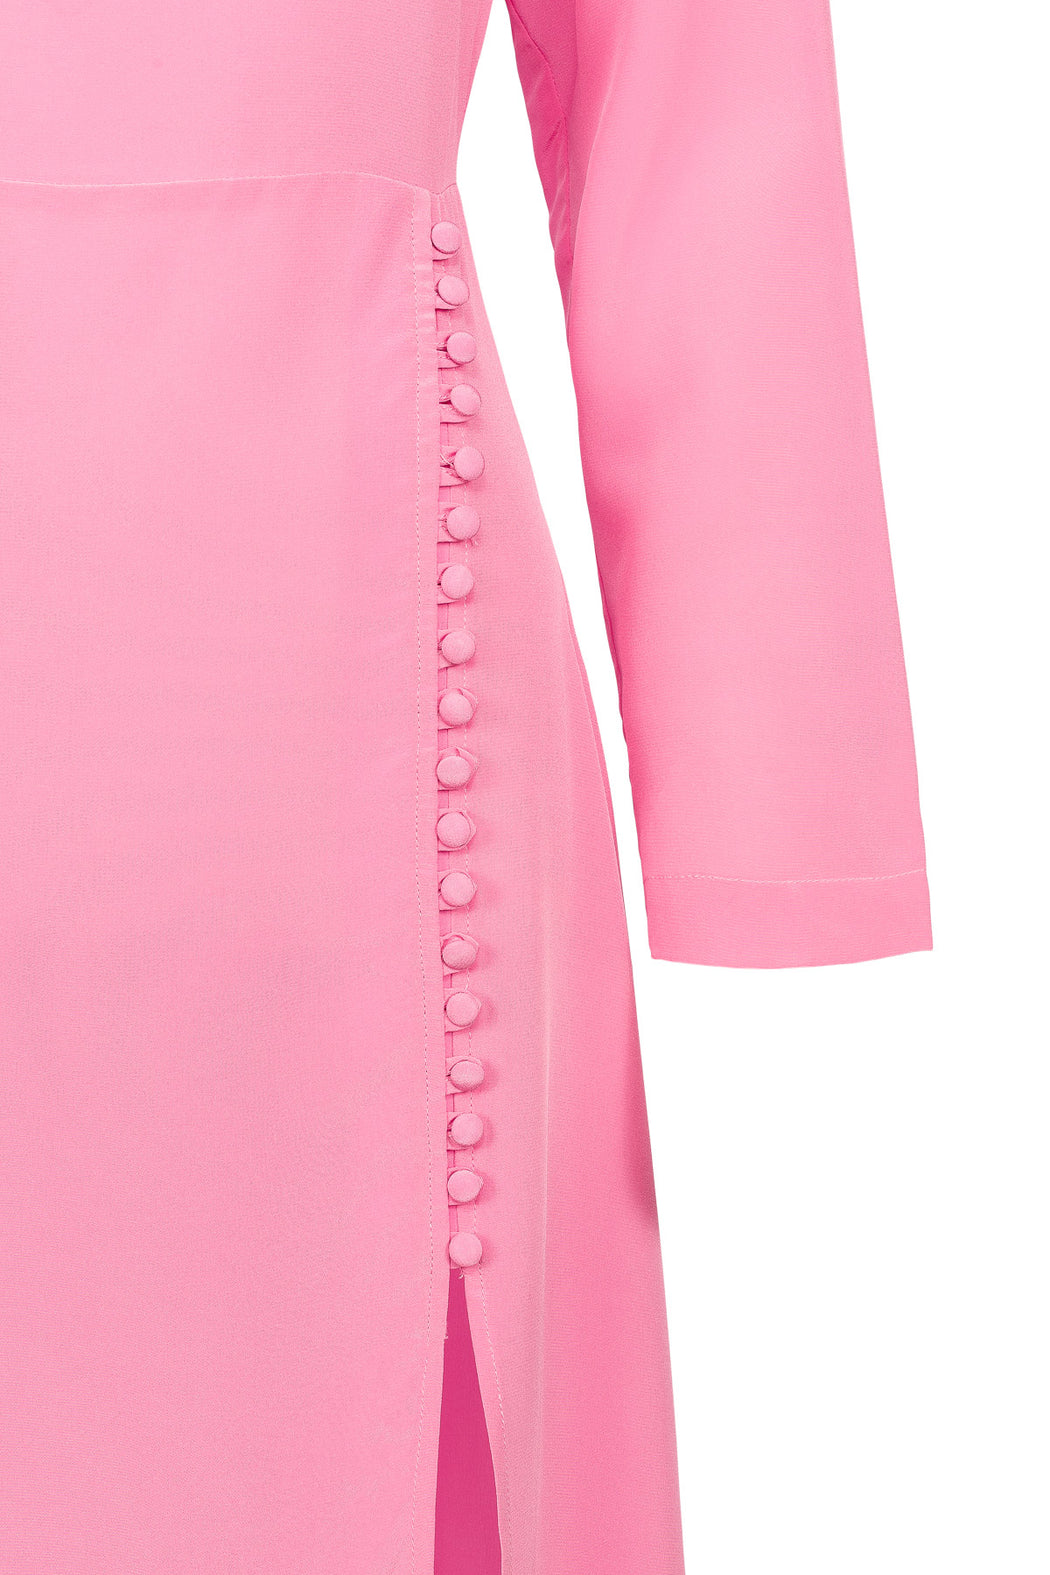 Envelope1976 Campania dress, silk CDC, Pink Dress Pink